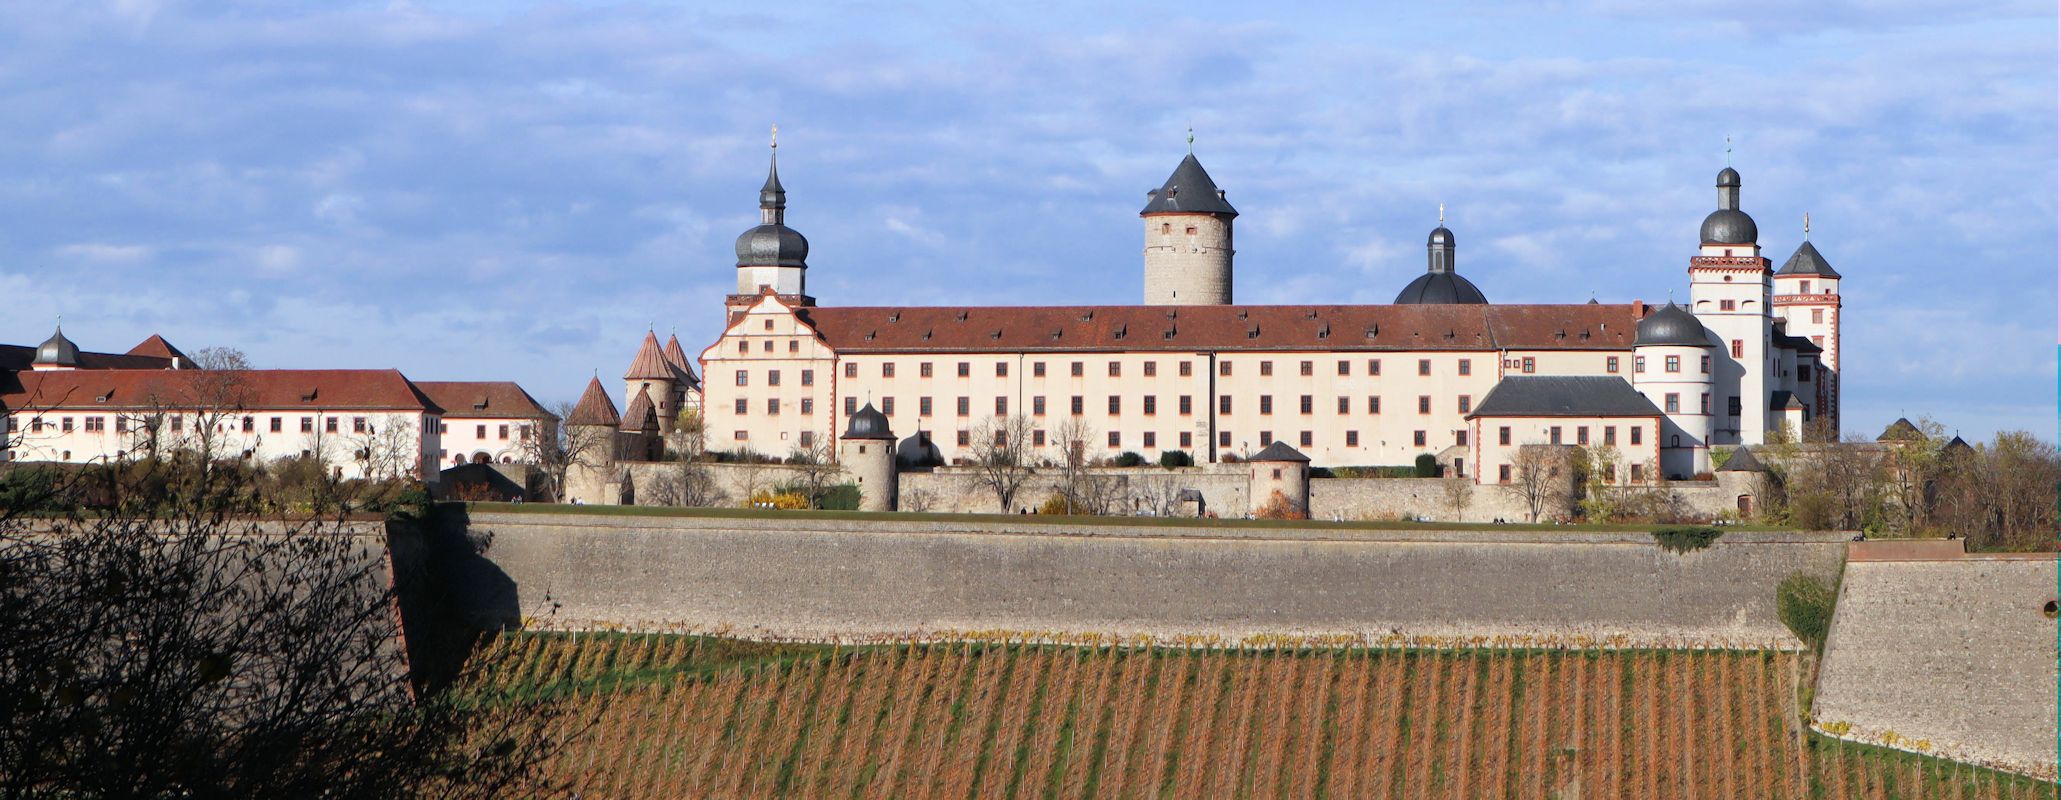 Festung Würzburg heute